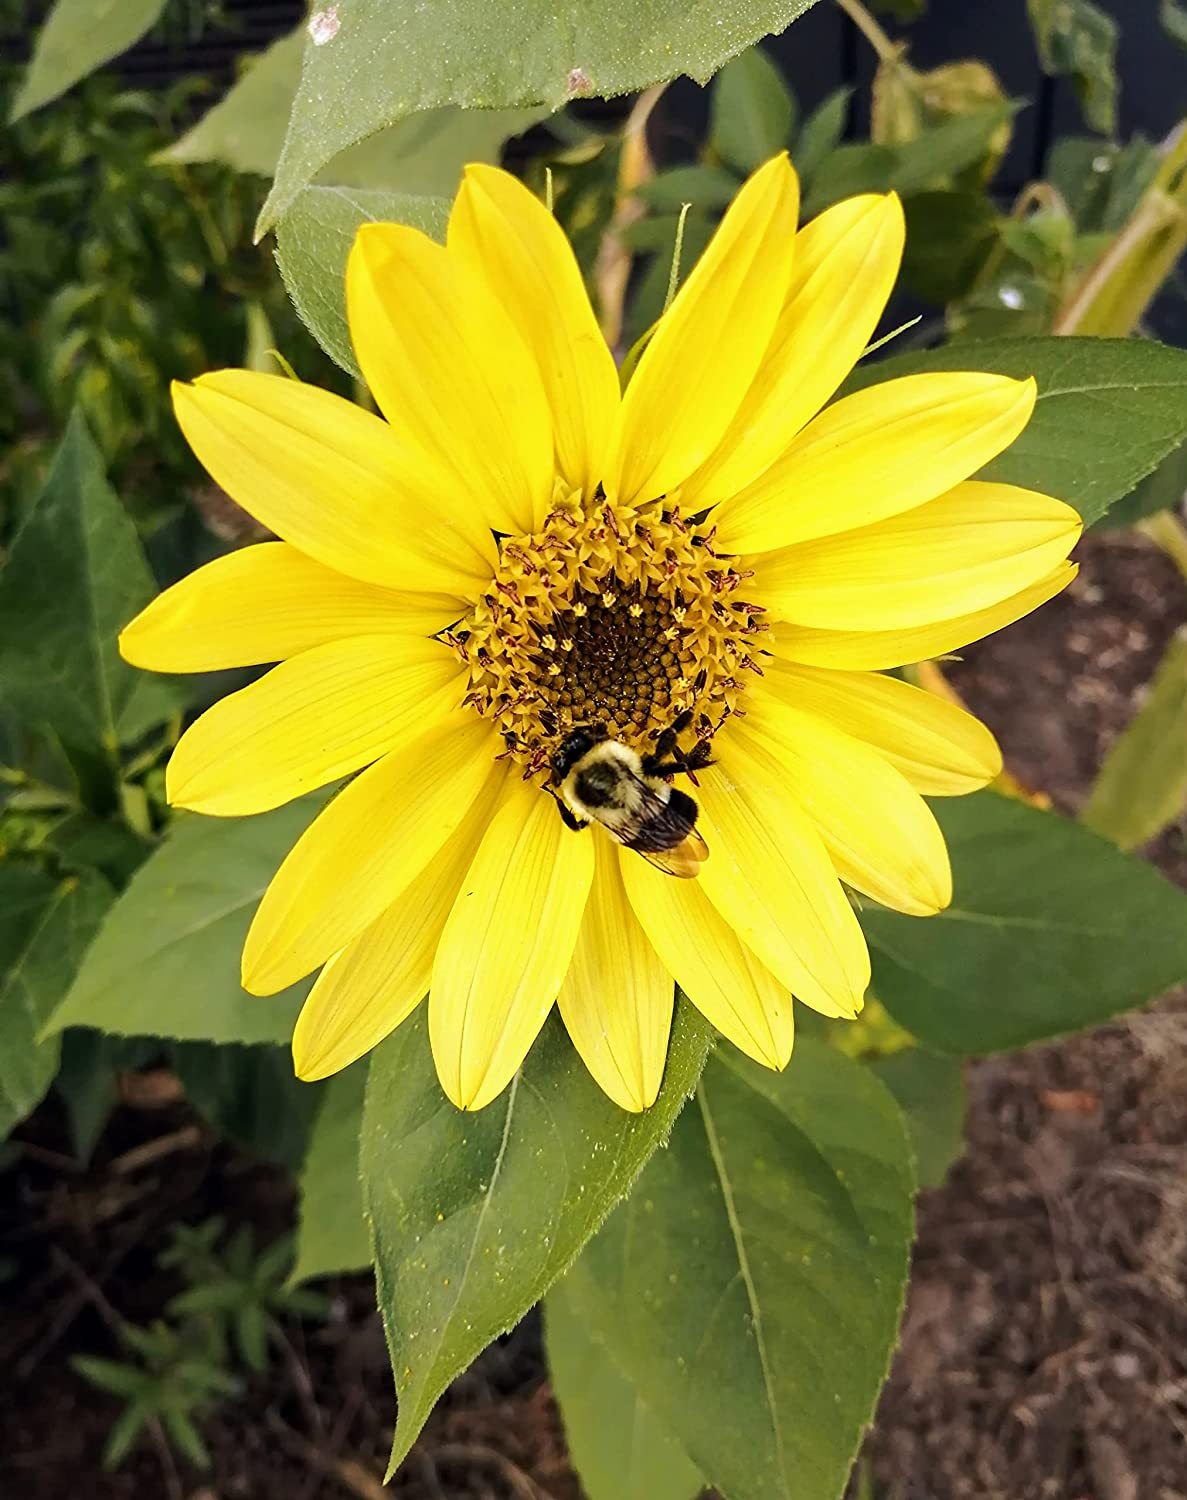 Hundredfold Lemon Queen Sunflower 30 Flower Seeds - Helianthus annus Attract Bees and Birds, Cut-Flowers